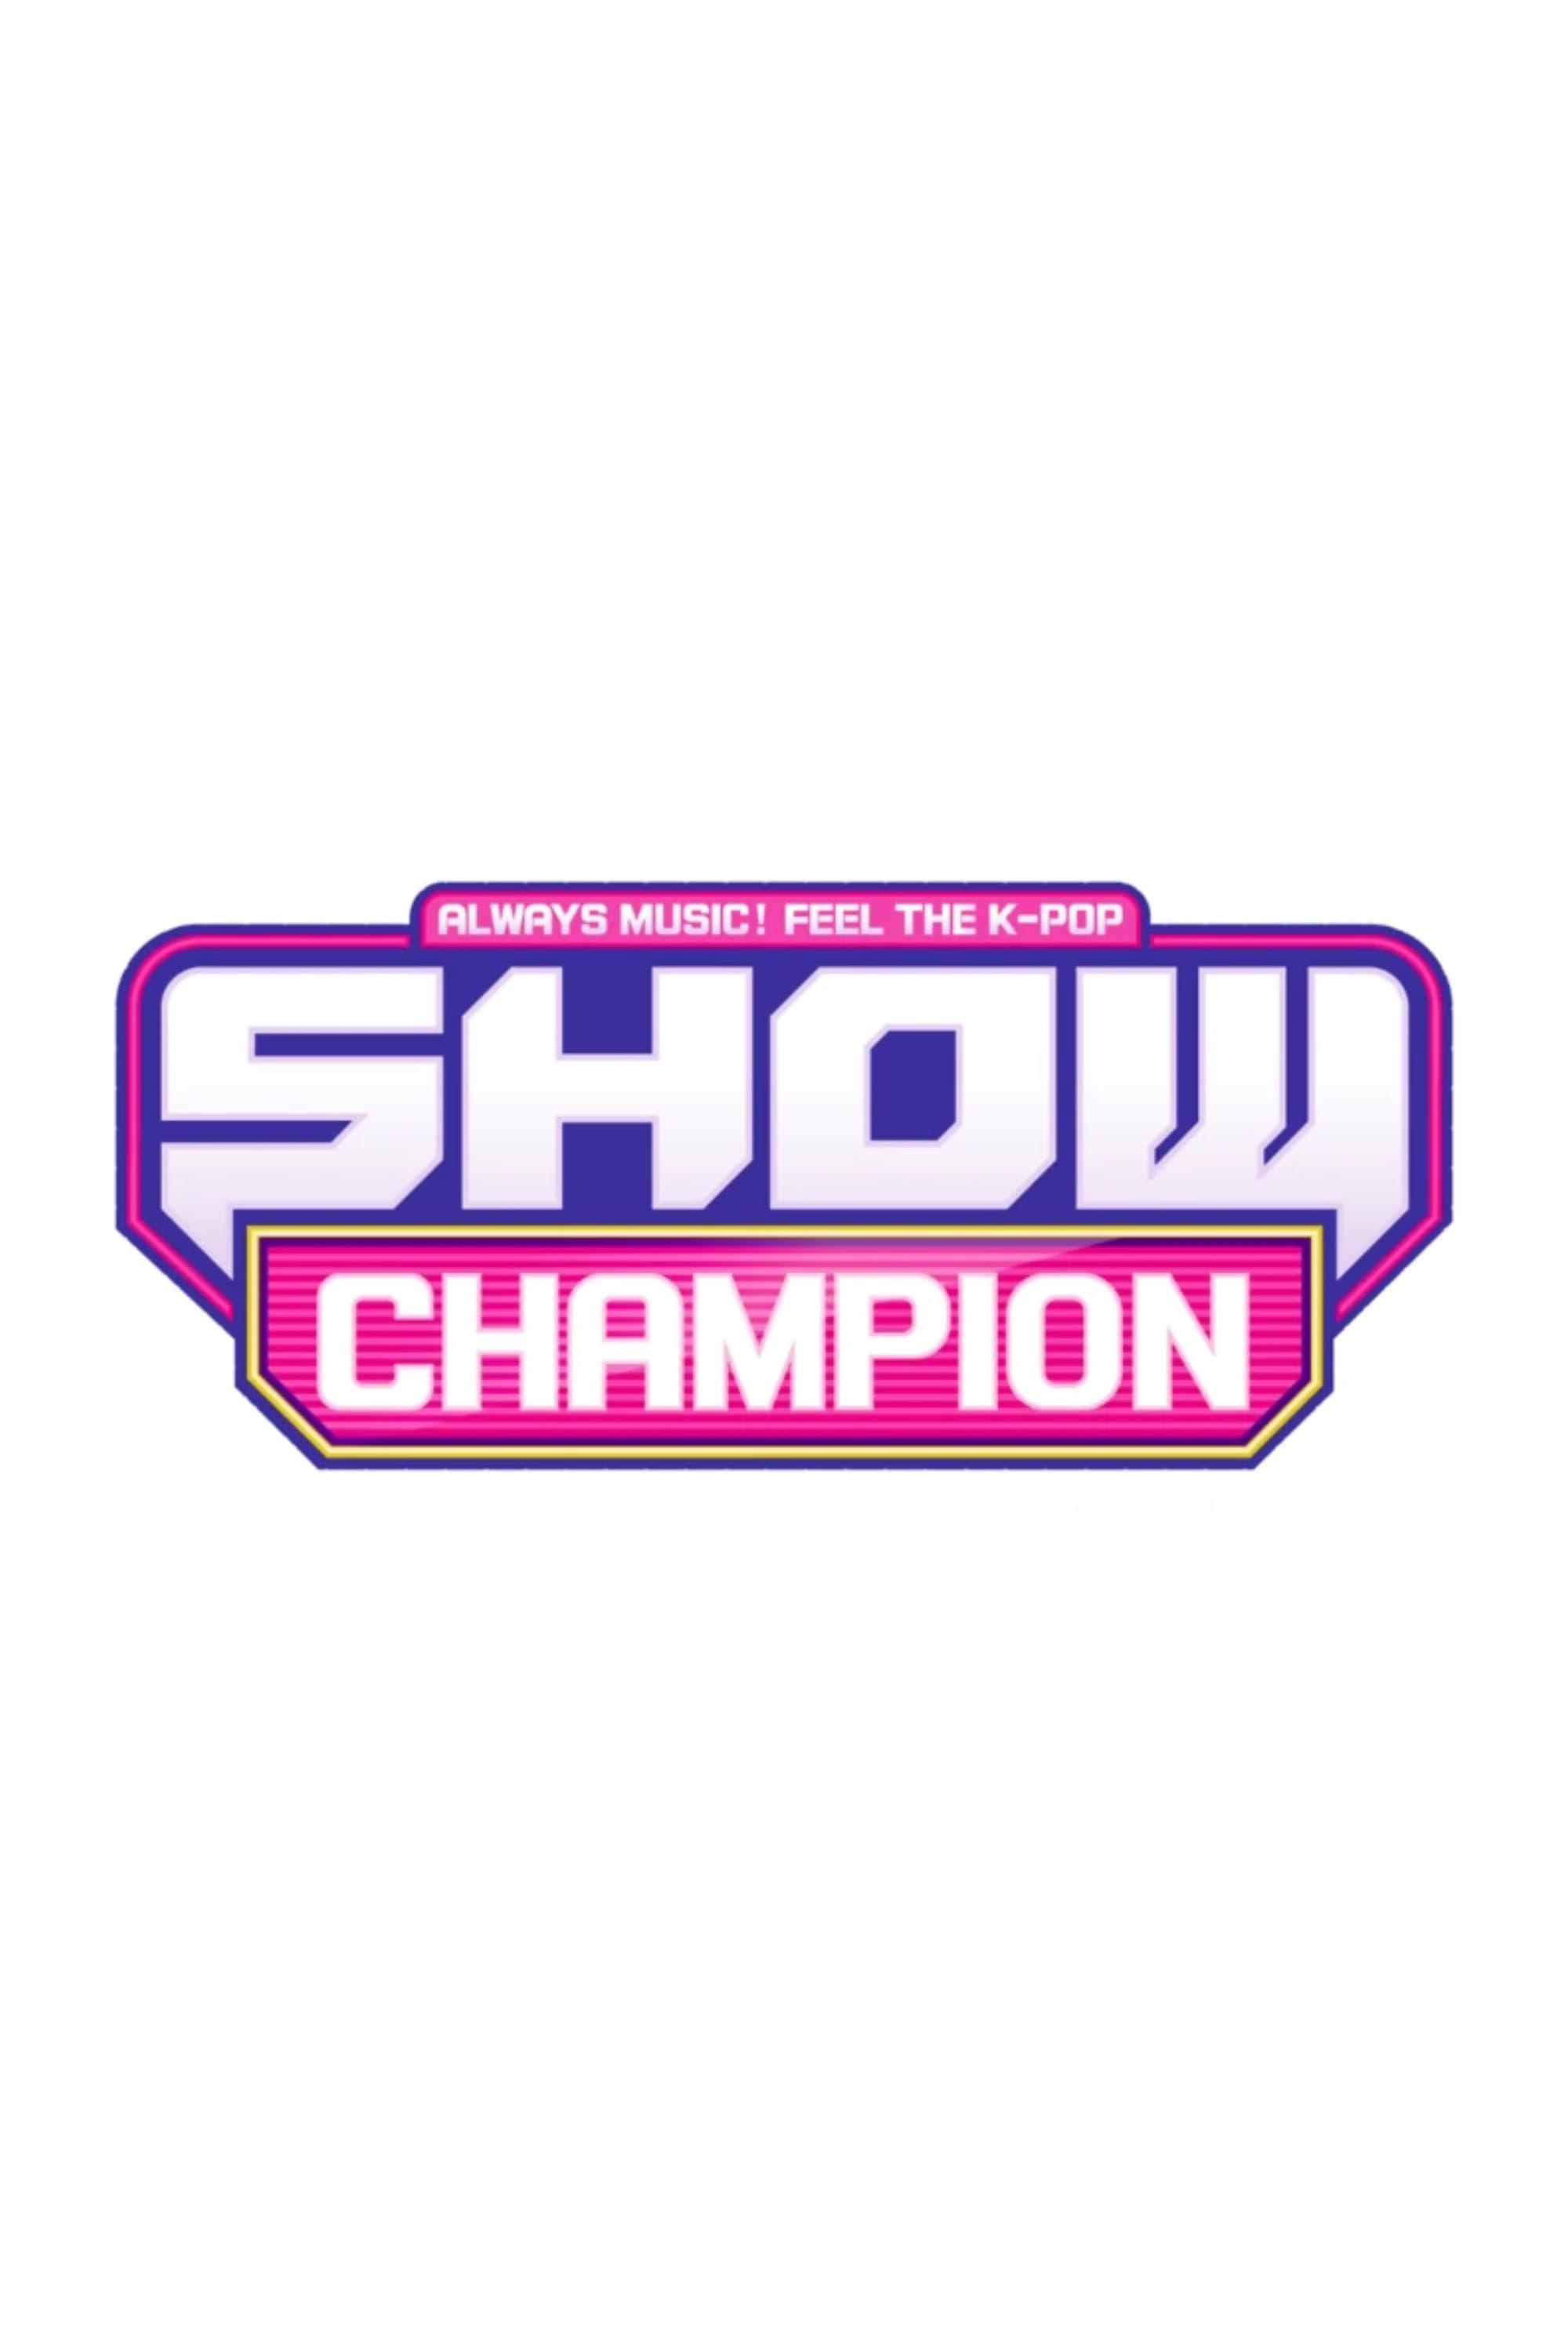 Show! Champion poster